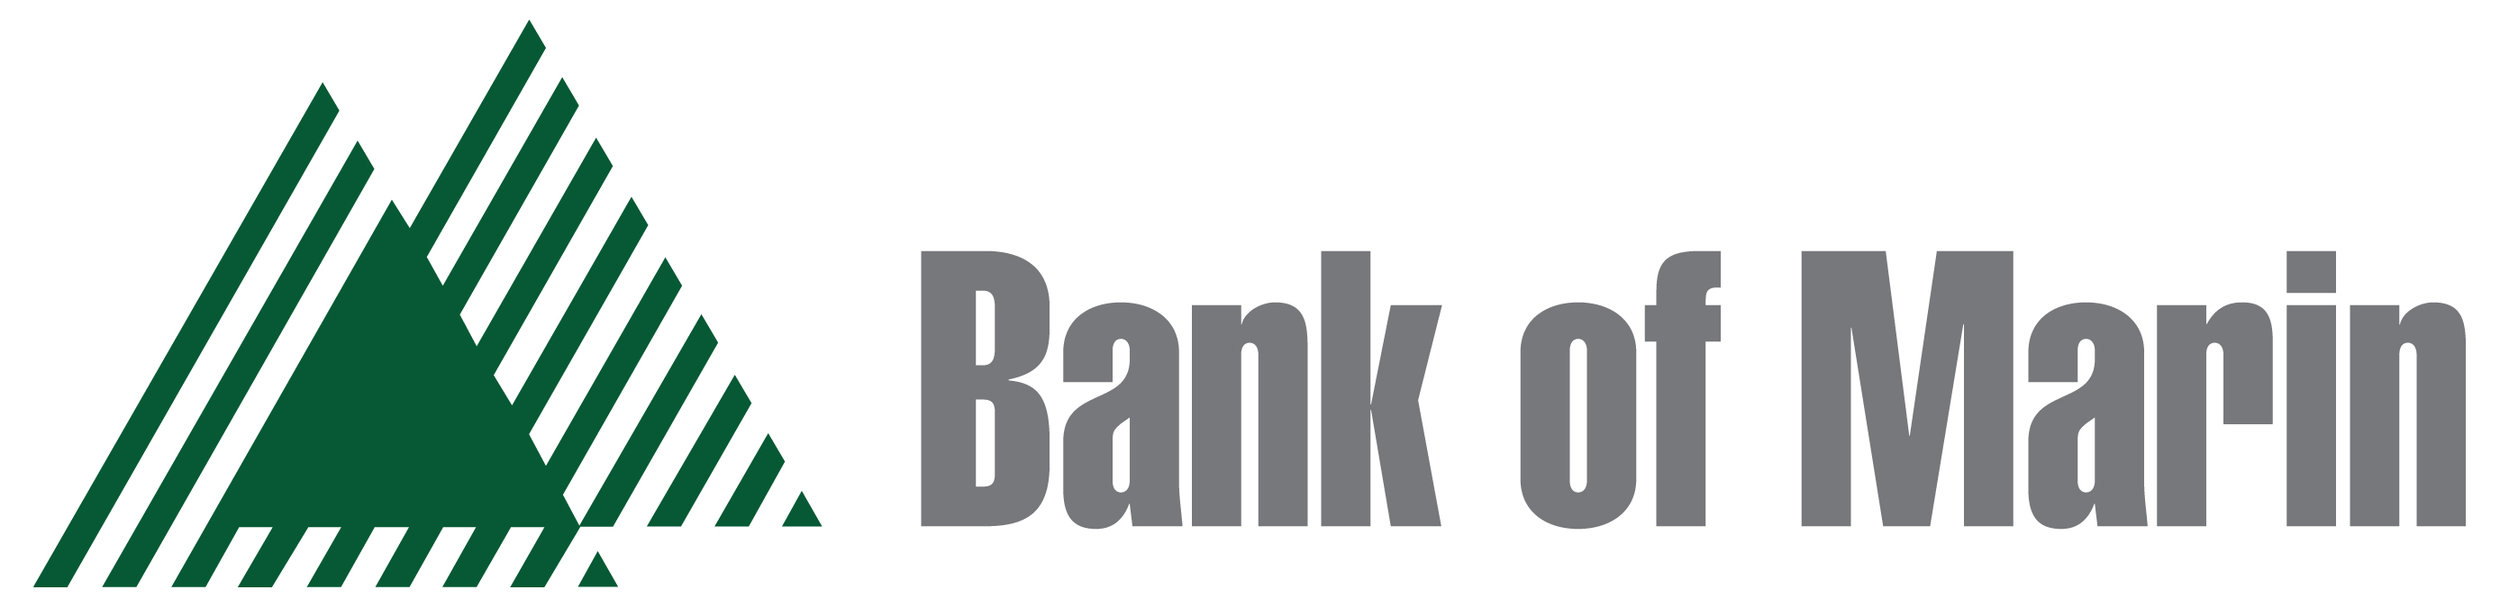 bank-of-marin-logo.jpg